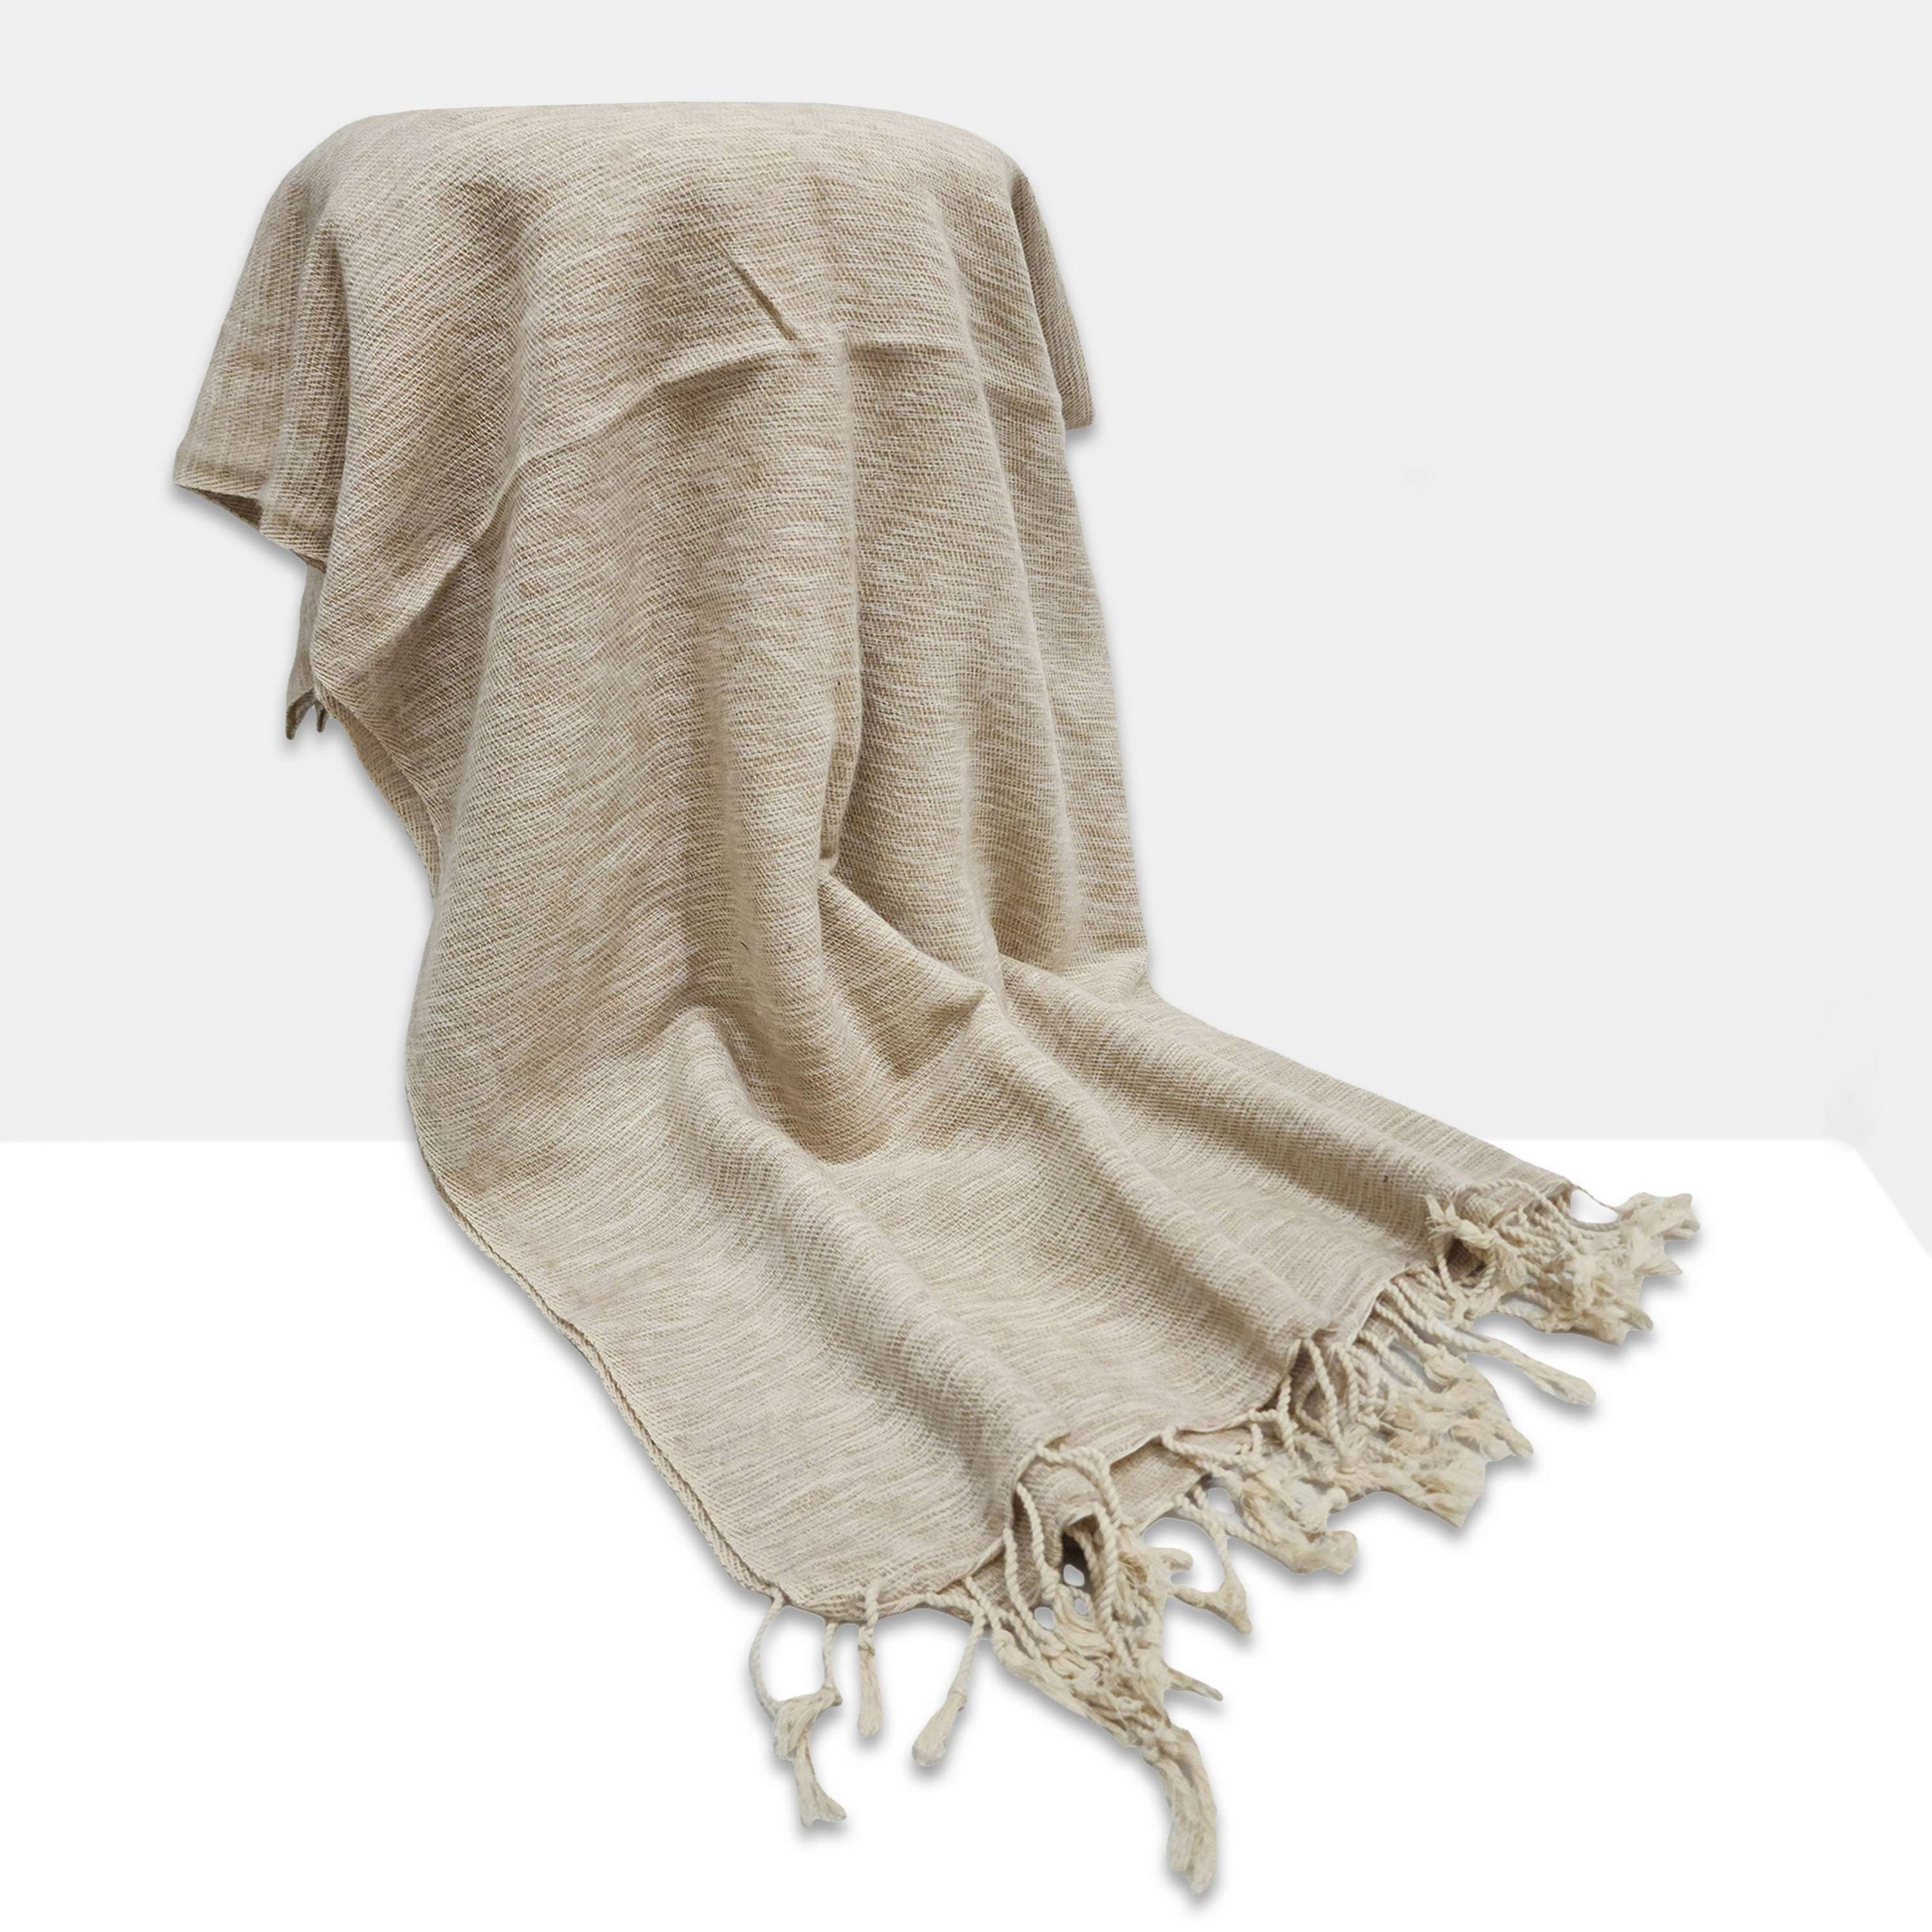 Yak Wool Blanket, Nepali Acrylic Hand Loom Blanket, Color grayish-brown